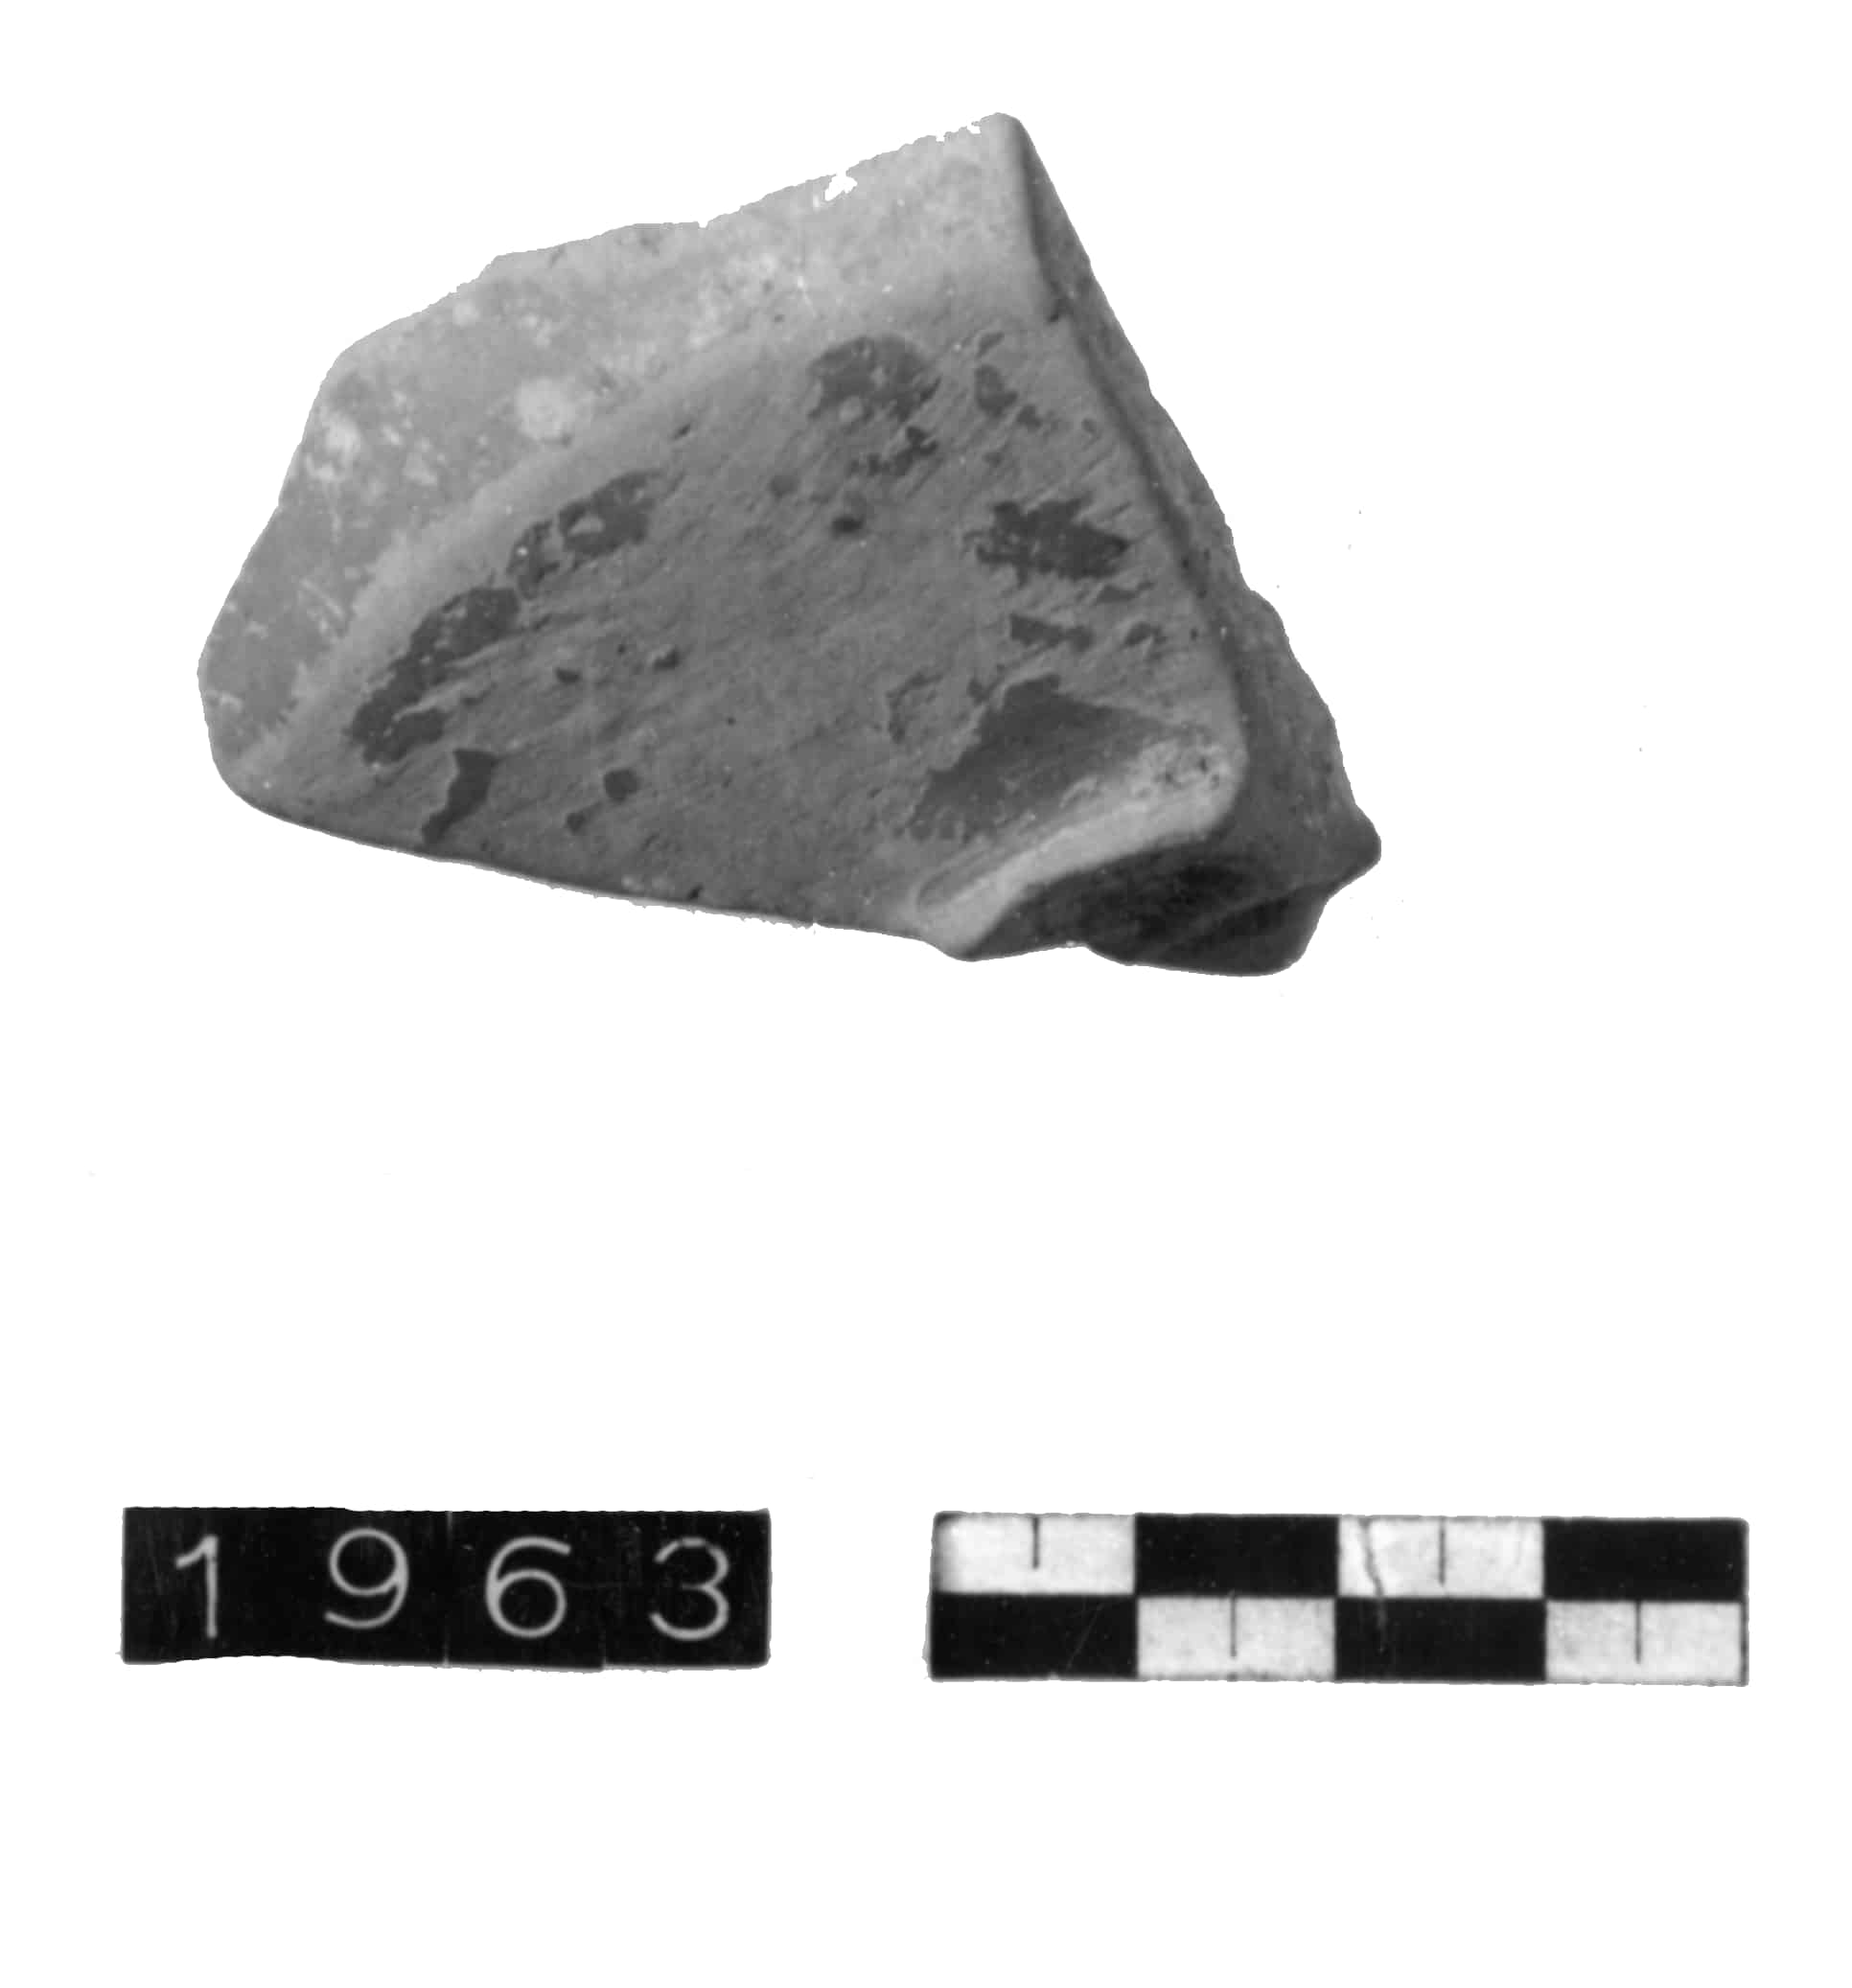 coppa, Lamboglia forma 3 (II - III sec. d.c)